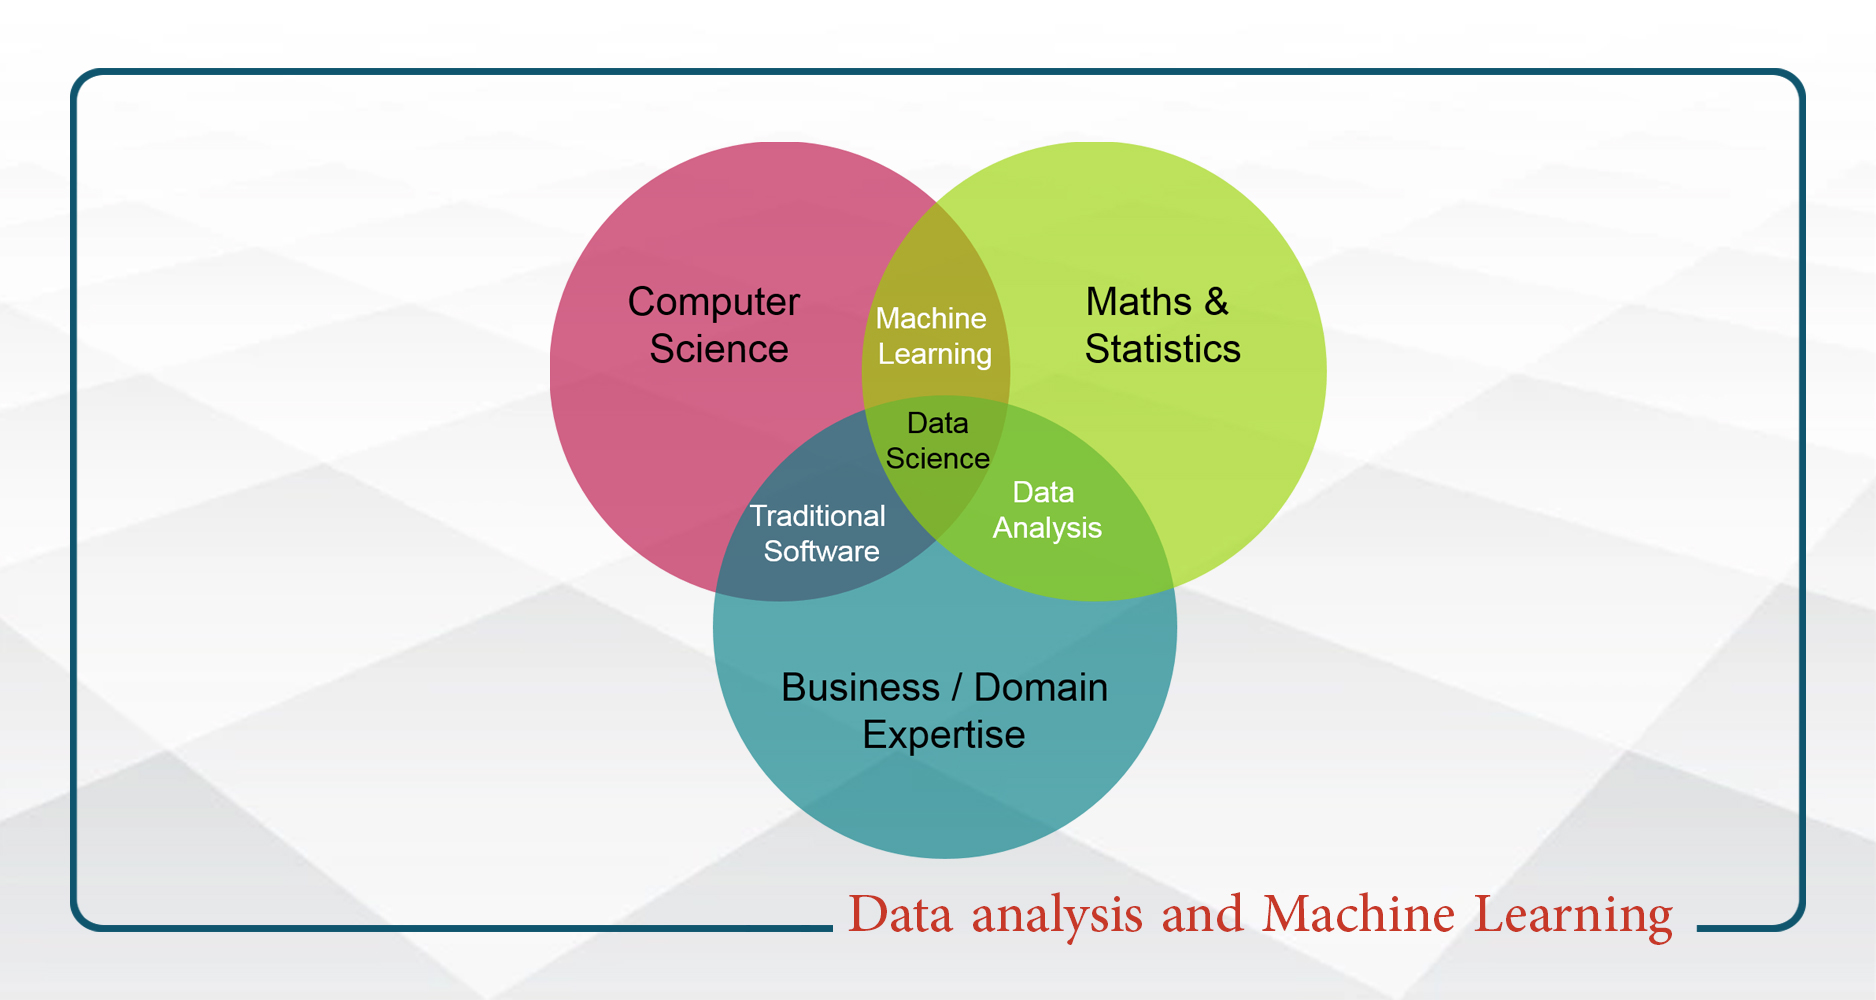 Data analysis and Machine Learning